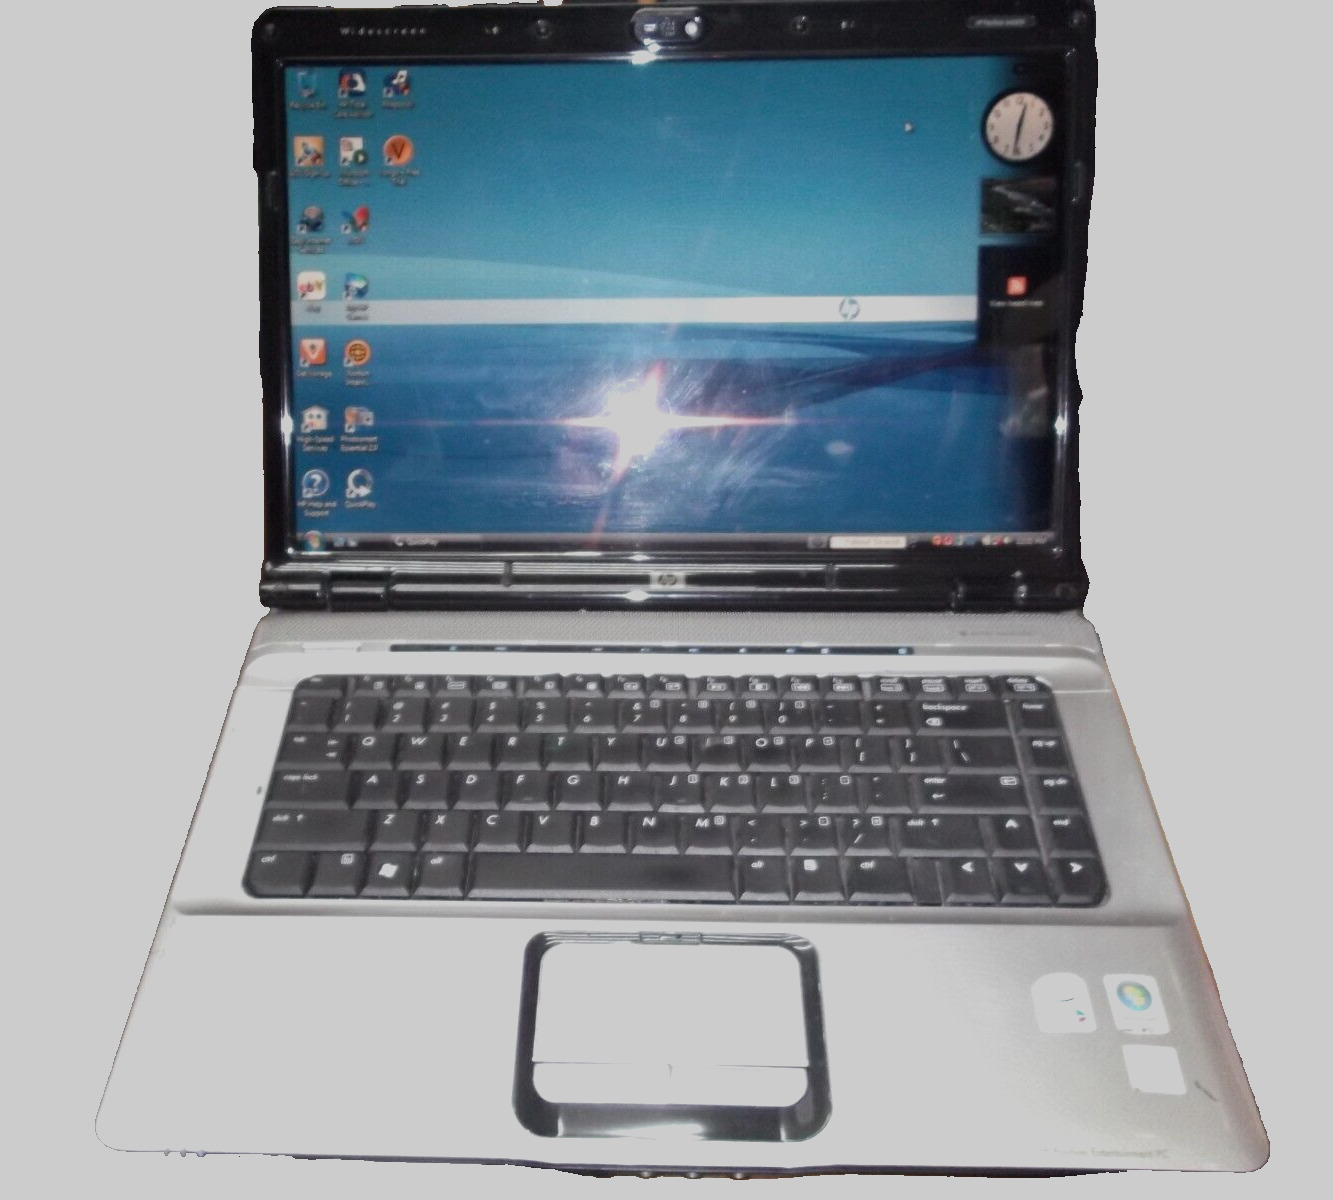 HP Pavilion DV6000 Entertainment Laptop Windows Vista Home Premium Free SD Card